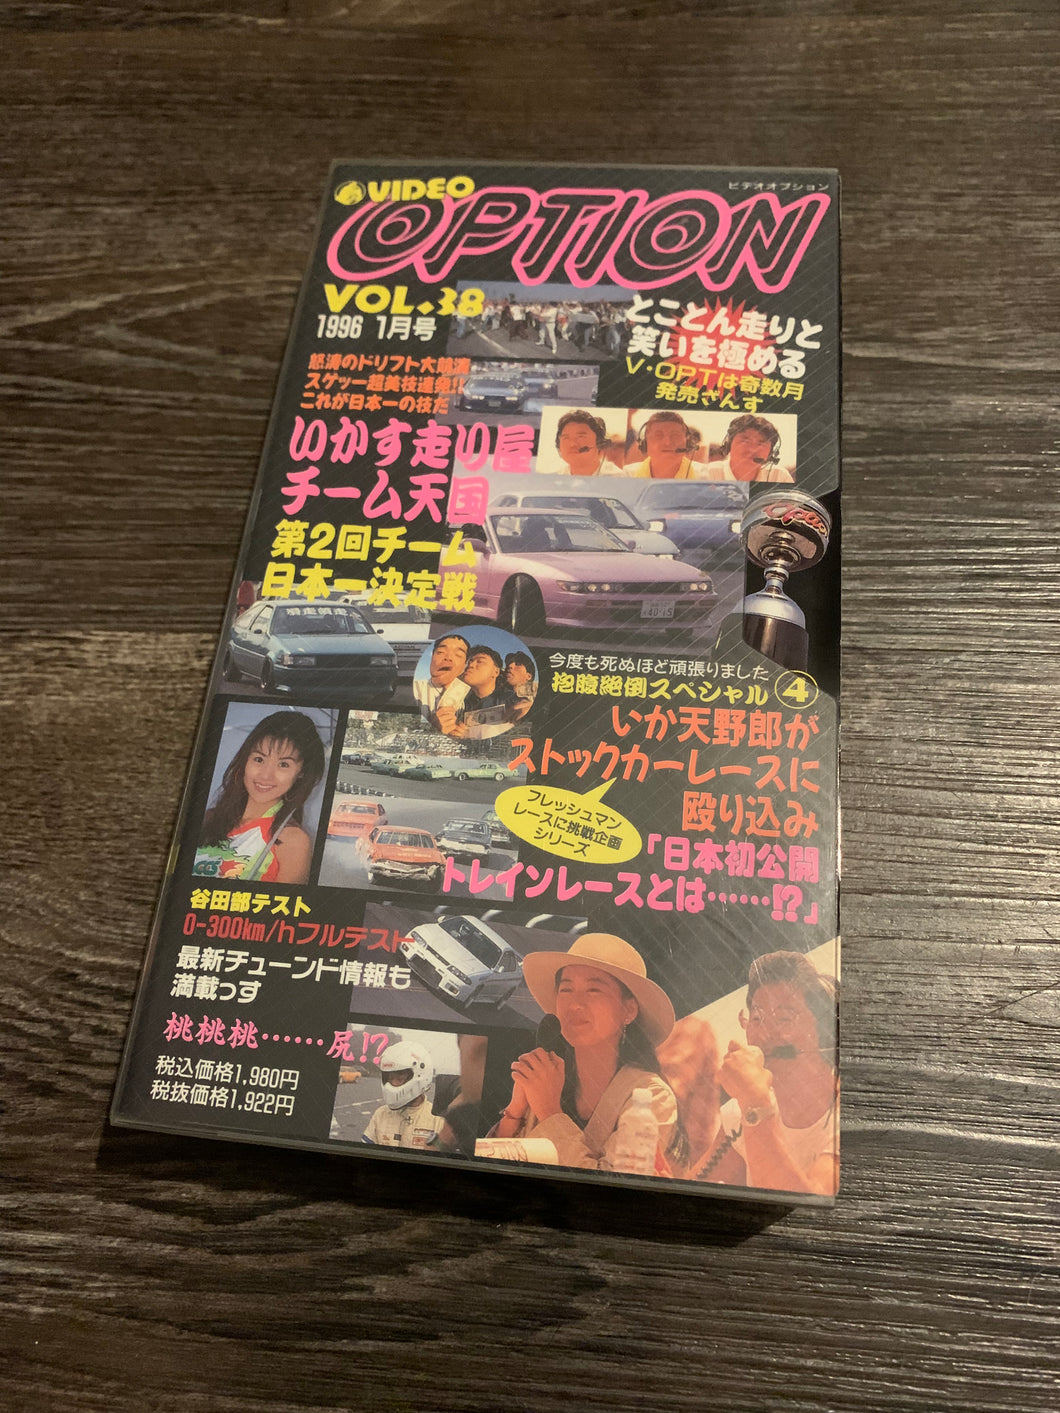 Option VHS Jan. 1996 Volume 38